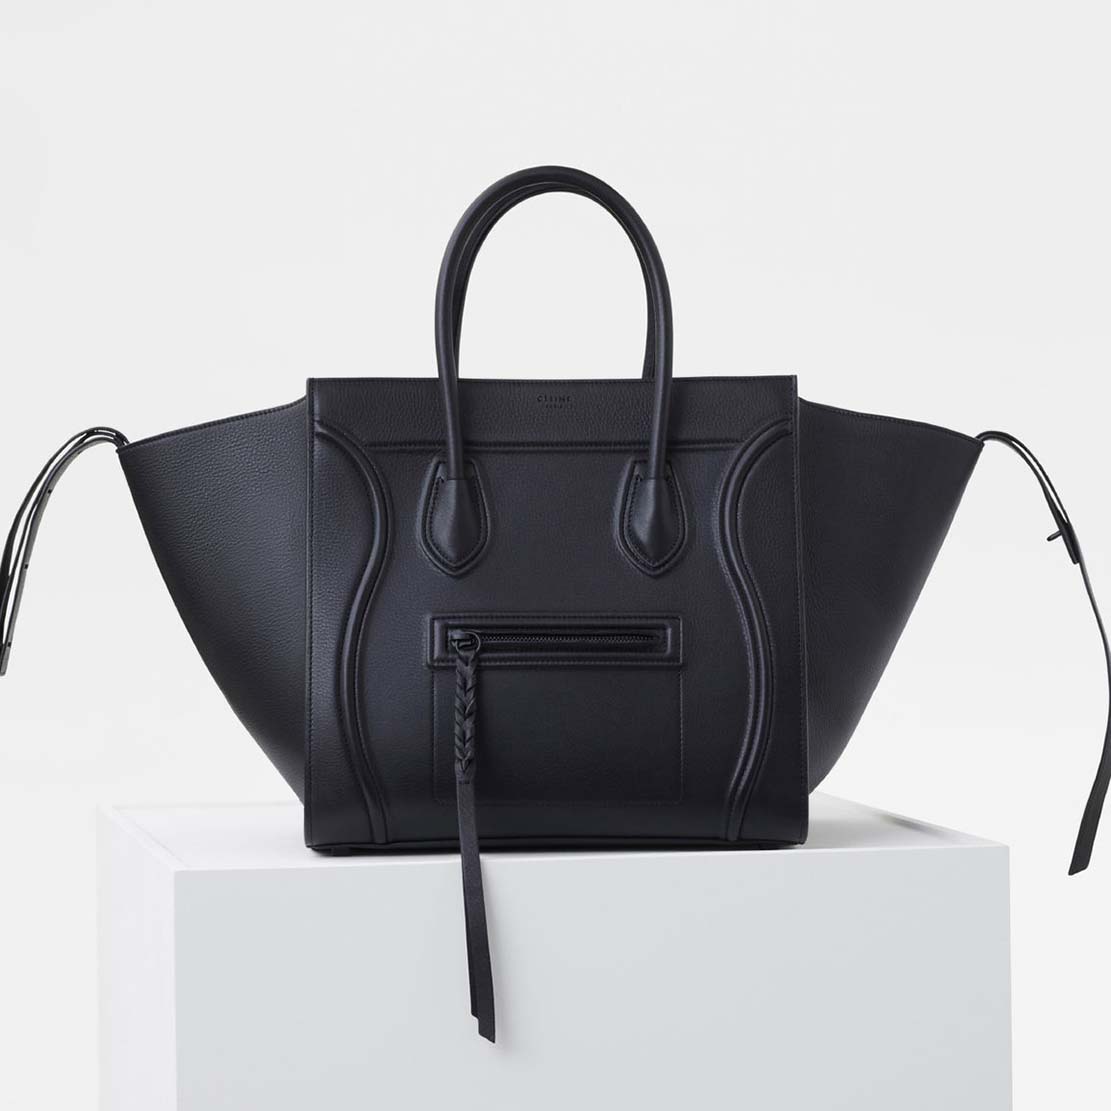 Celine Medium Luggage Phantom Bag in Baby Calfskin Leather